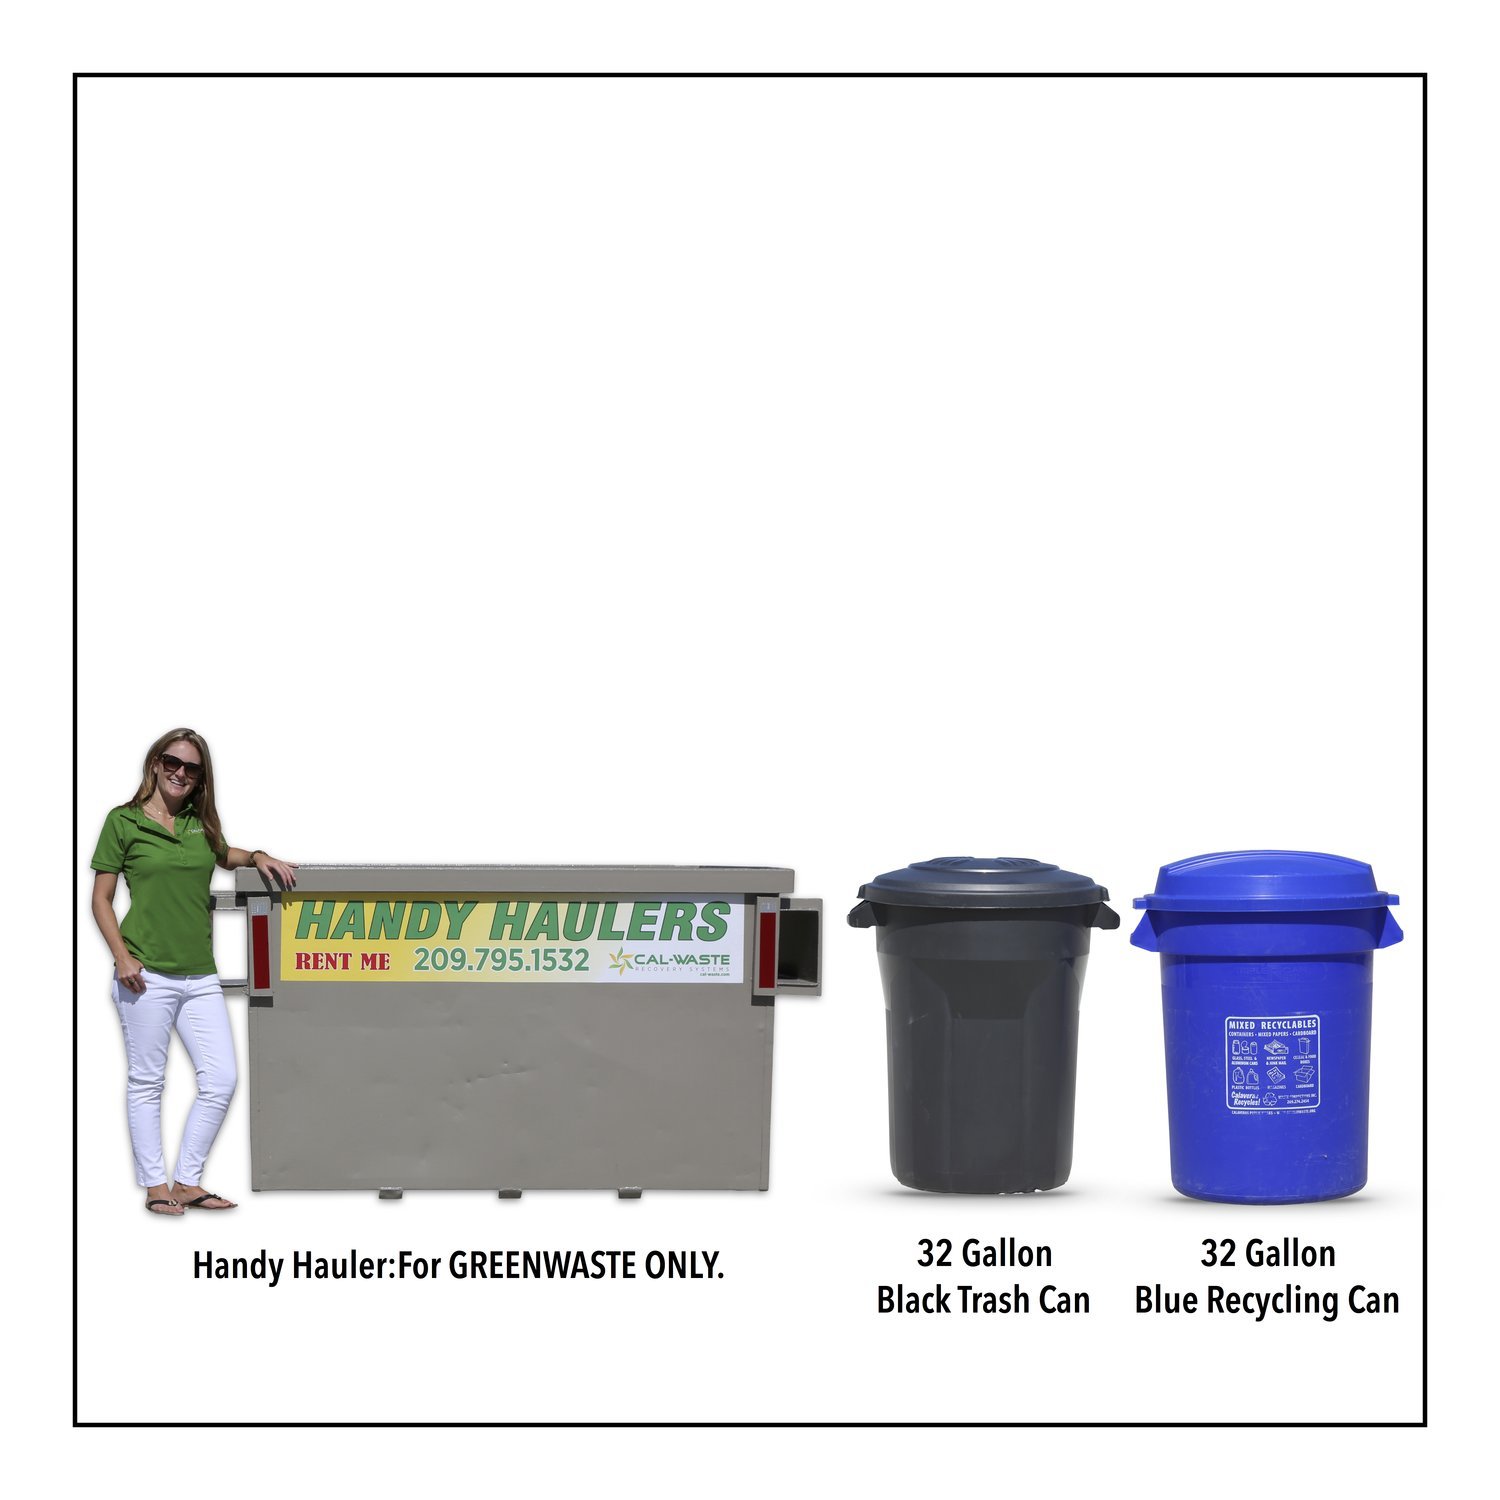 Cal-Waste CAN Service - 32 Gallon Trash & Recycling, Yearly Yard & Garden Handy Hauler